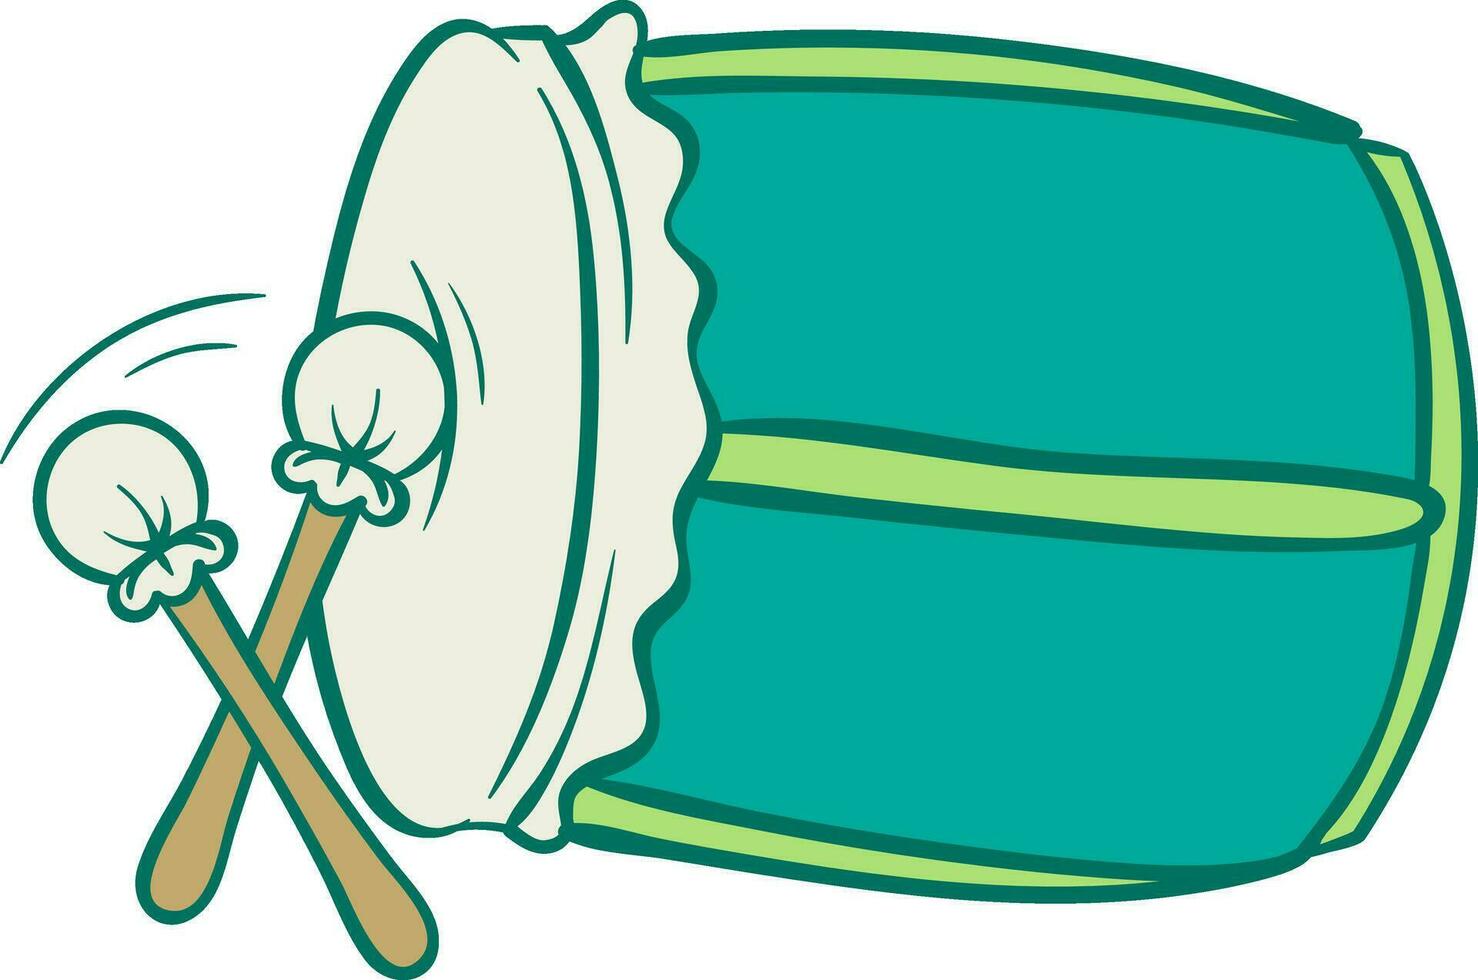 Bedug aka Mosque Drum Illustration vector